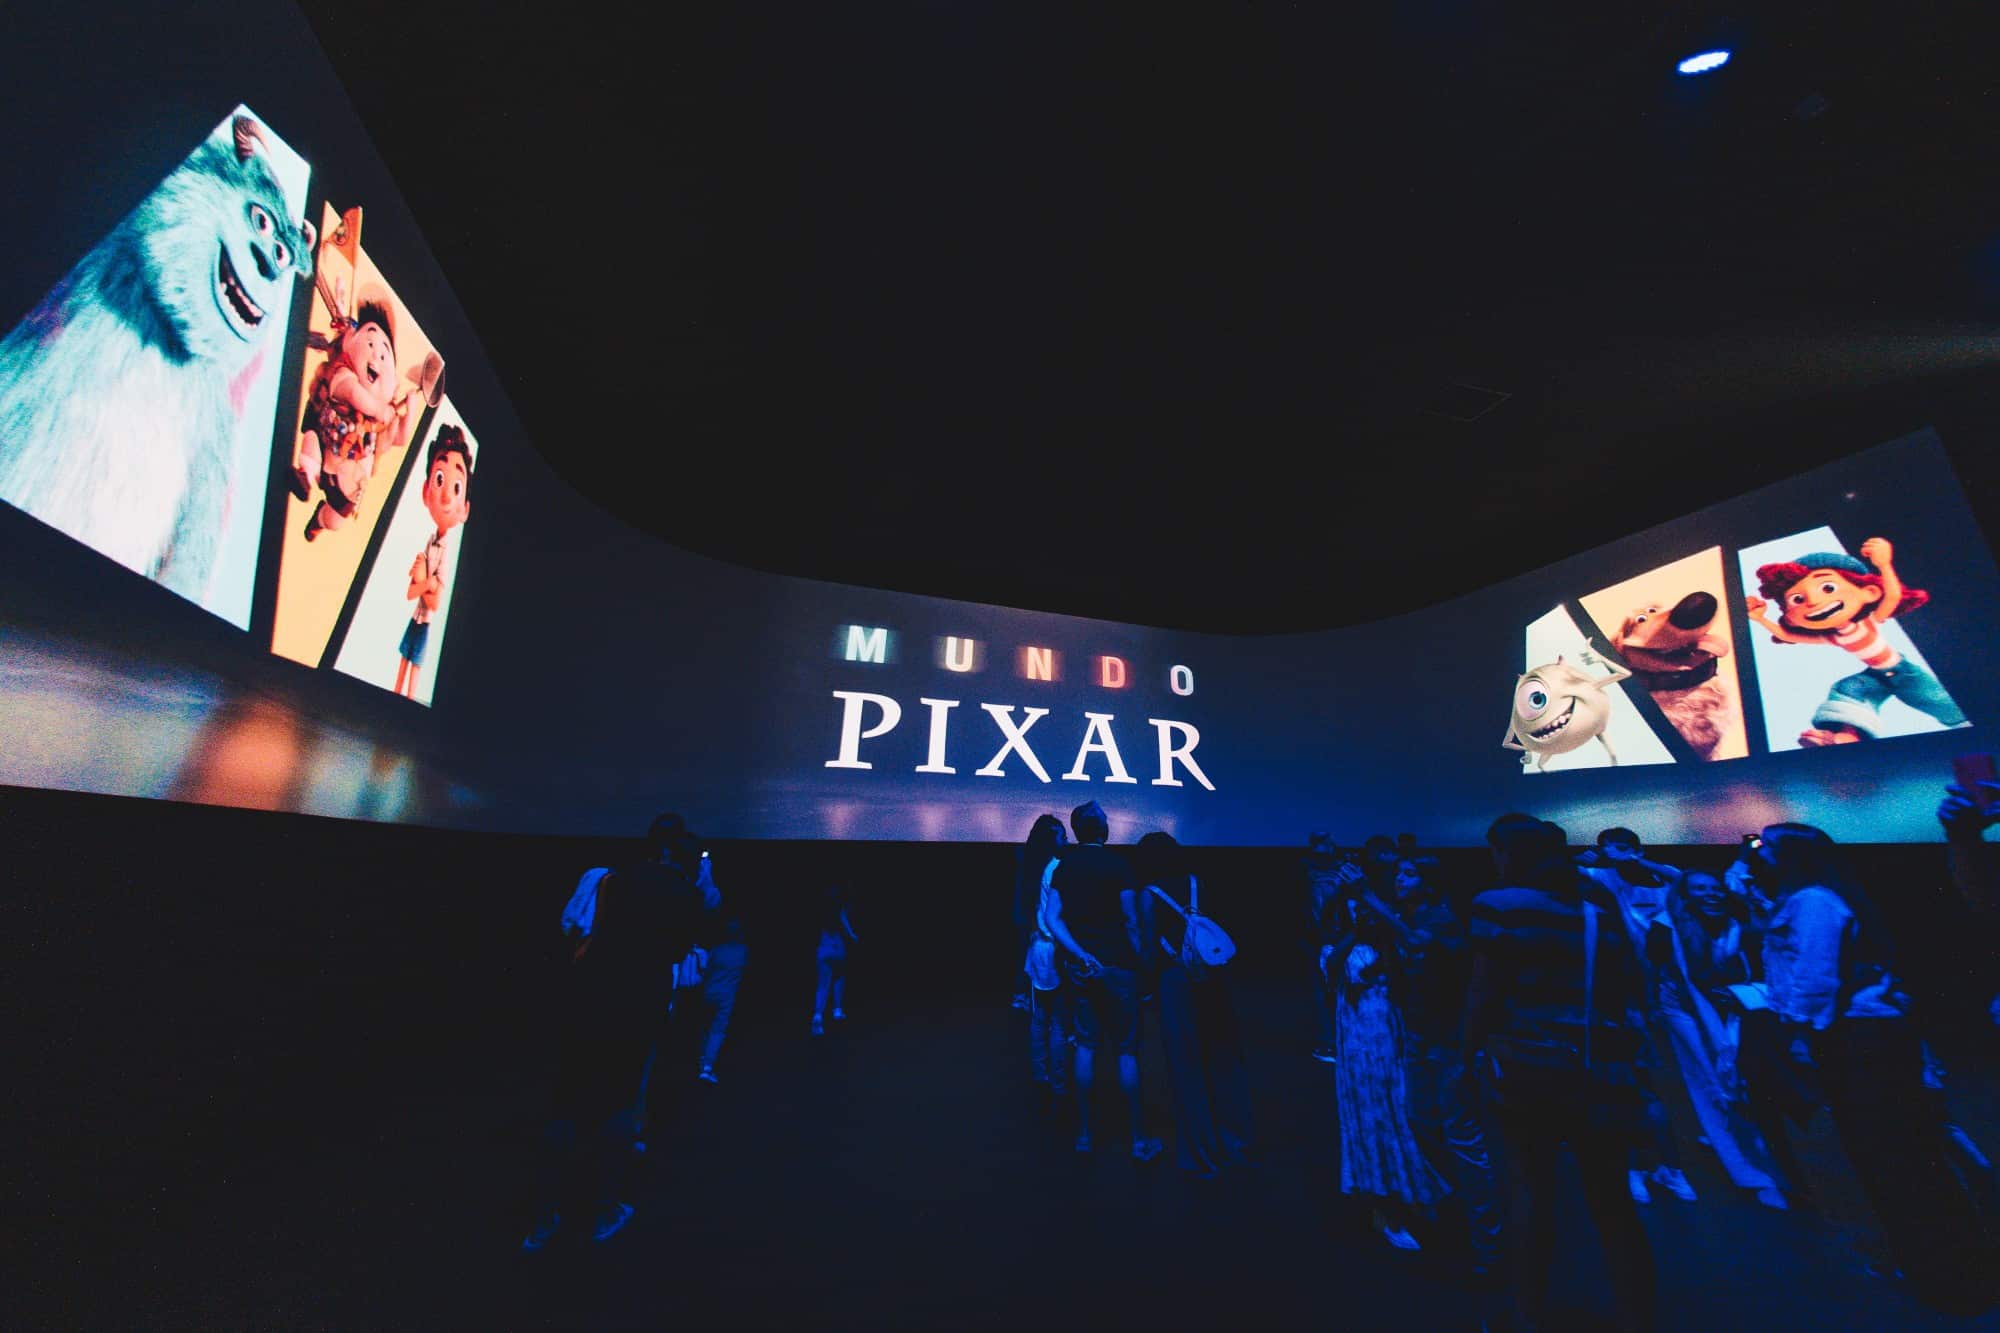 Mundo Pixar RJ